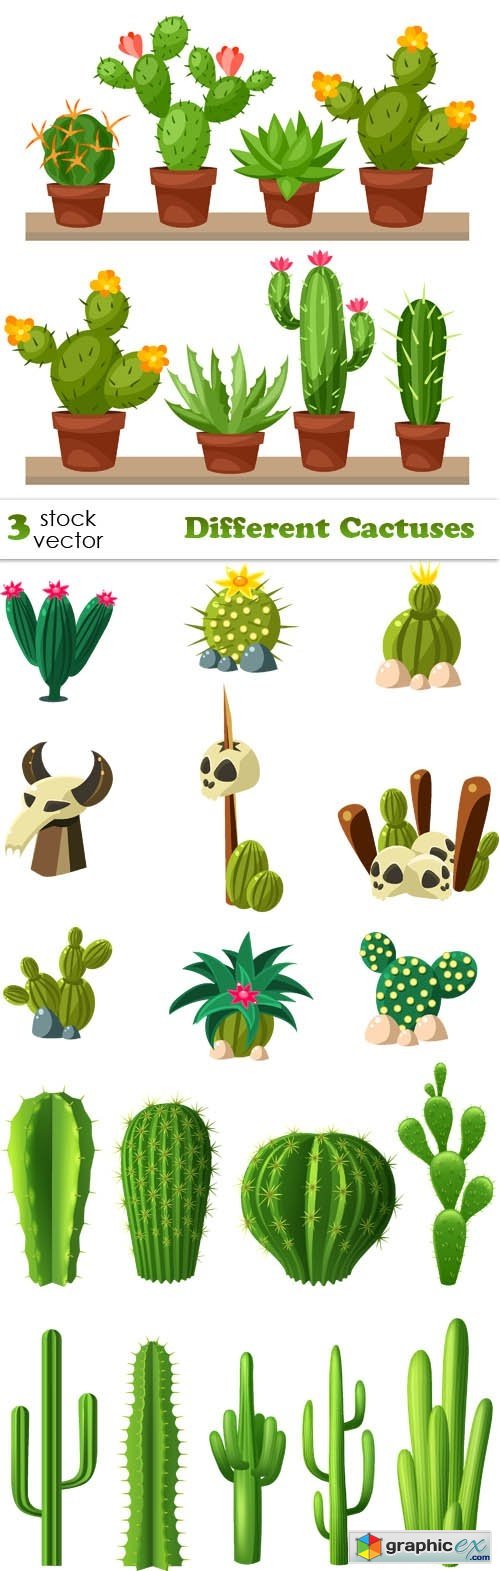 Vectors - Different Cactuses